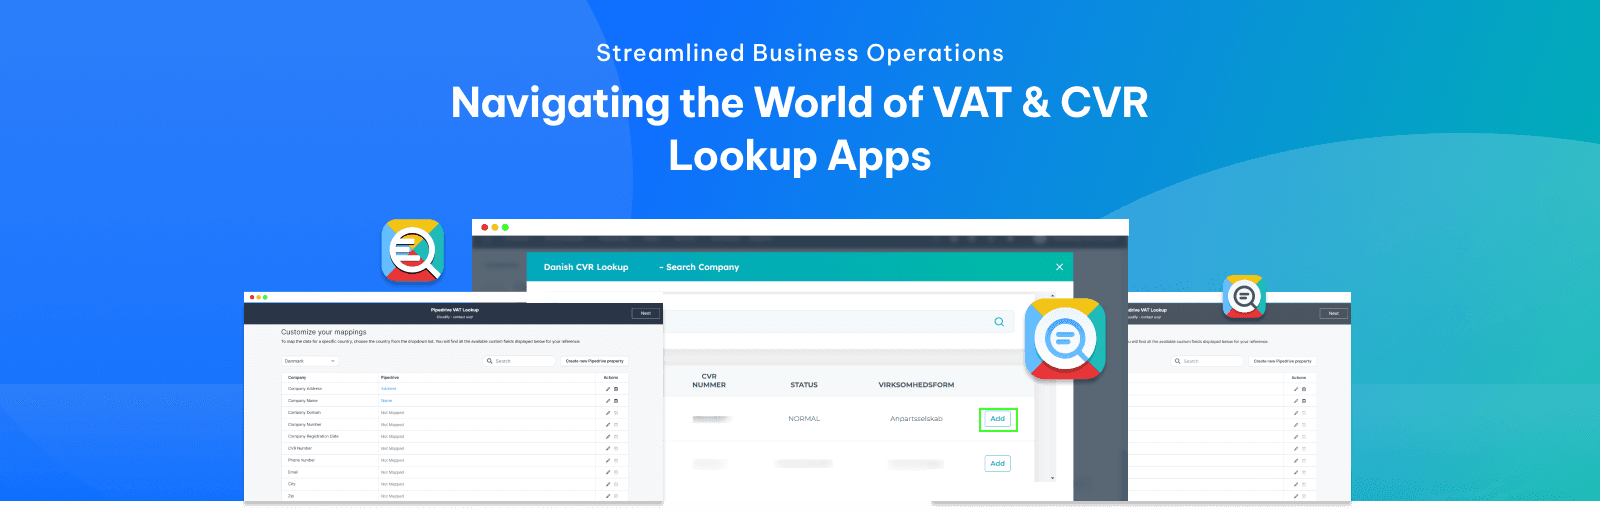 Streamlined Business Operations: Navigating the World of VAT & CVR Lookup Apps